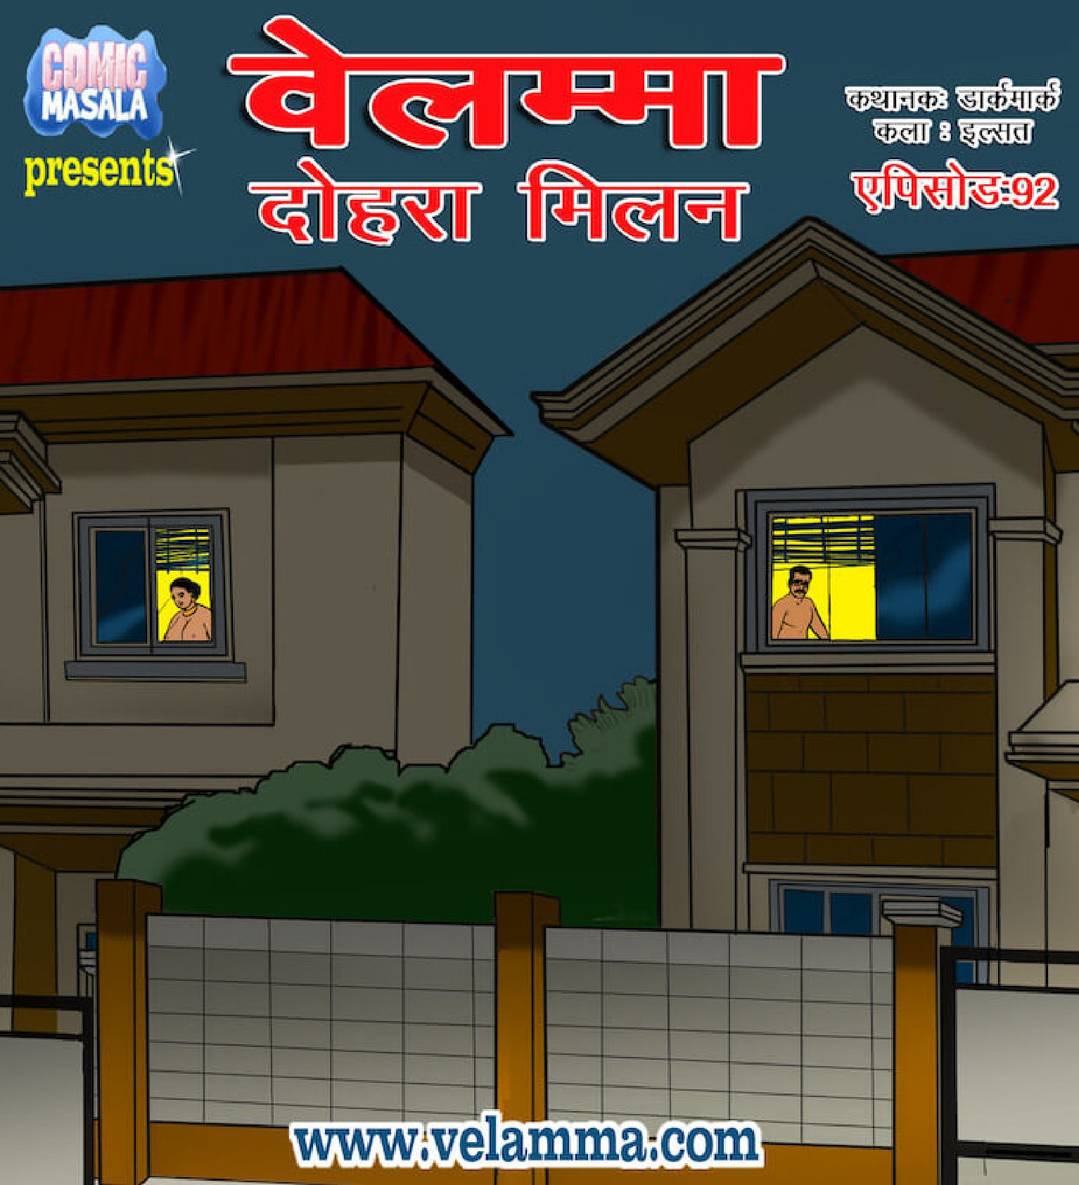 Velamma Episode 92 Hindi – Dohra milan (दोहरा मिलन) - 11 - FSIComics